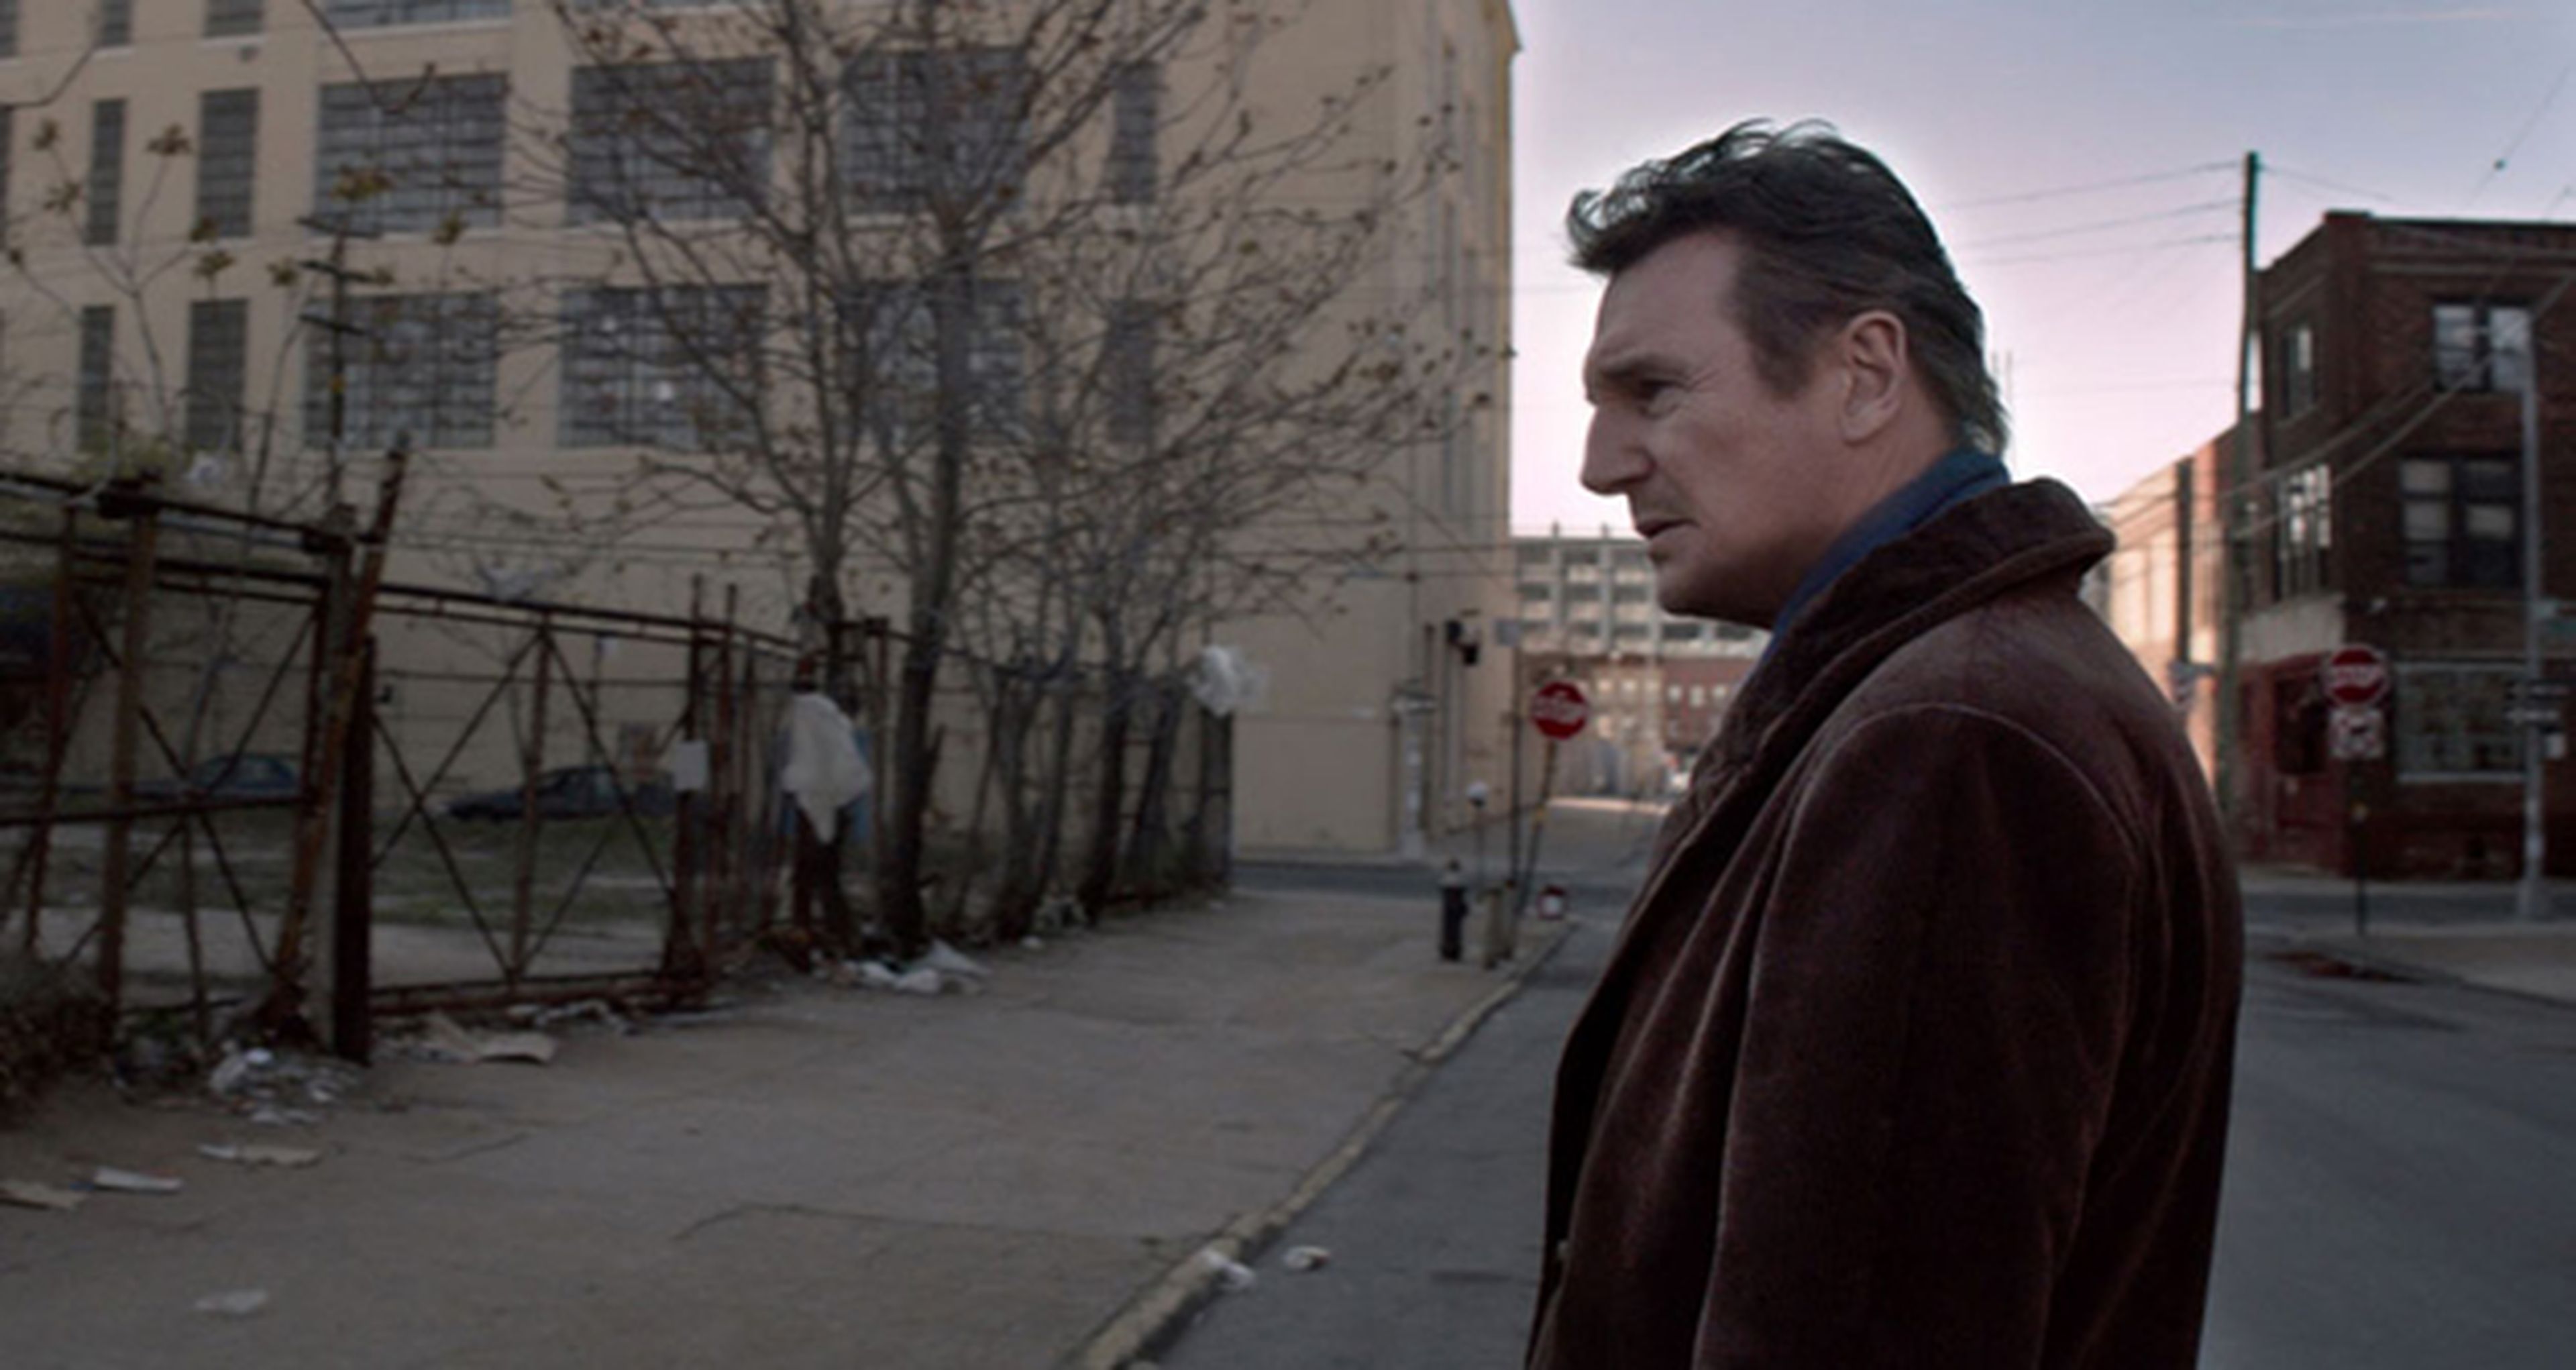 Liam Neeson protagoniza Caminando entre las tumbas